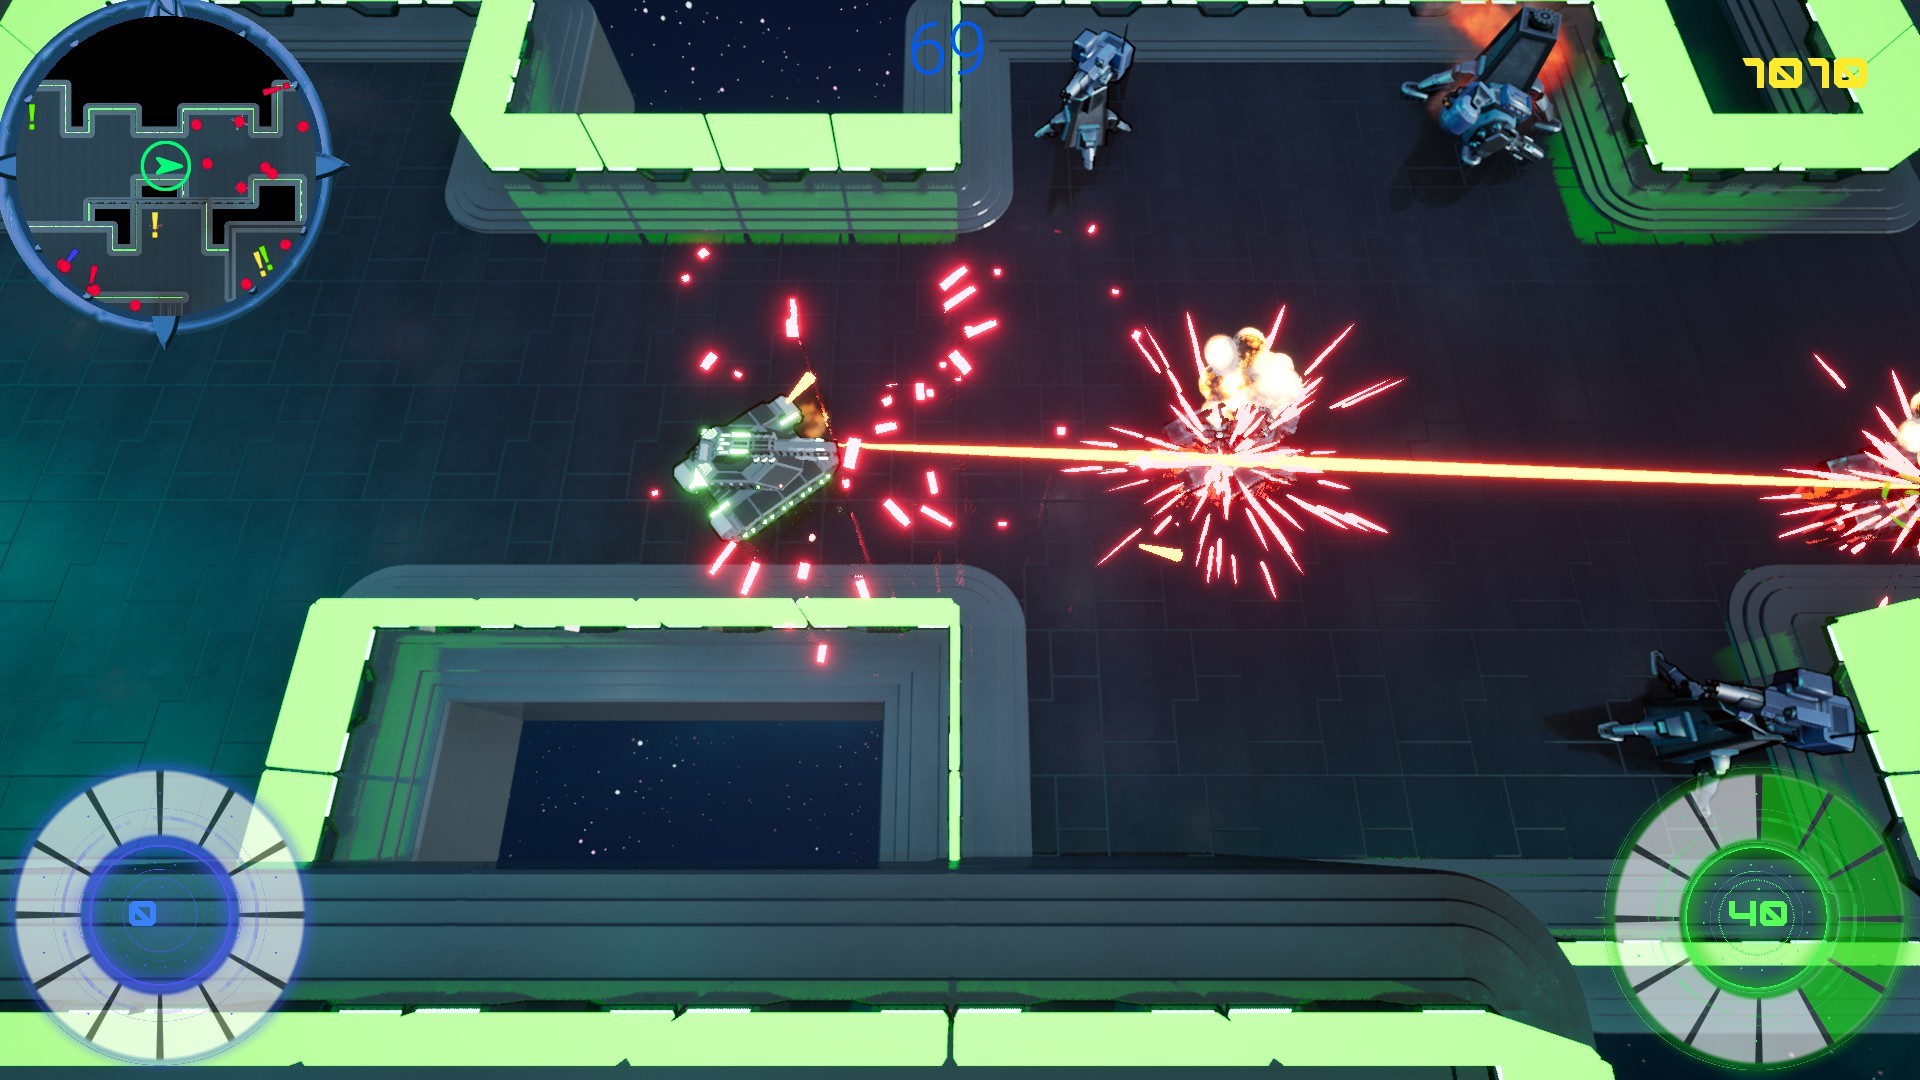 Senshi Tank 2: Space Bots Free Download